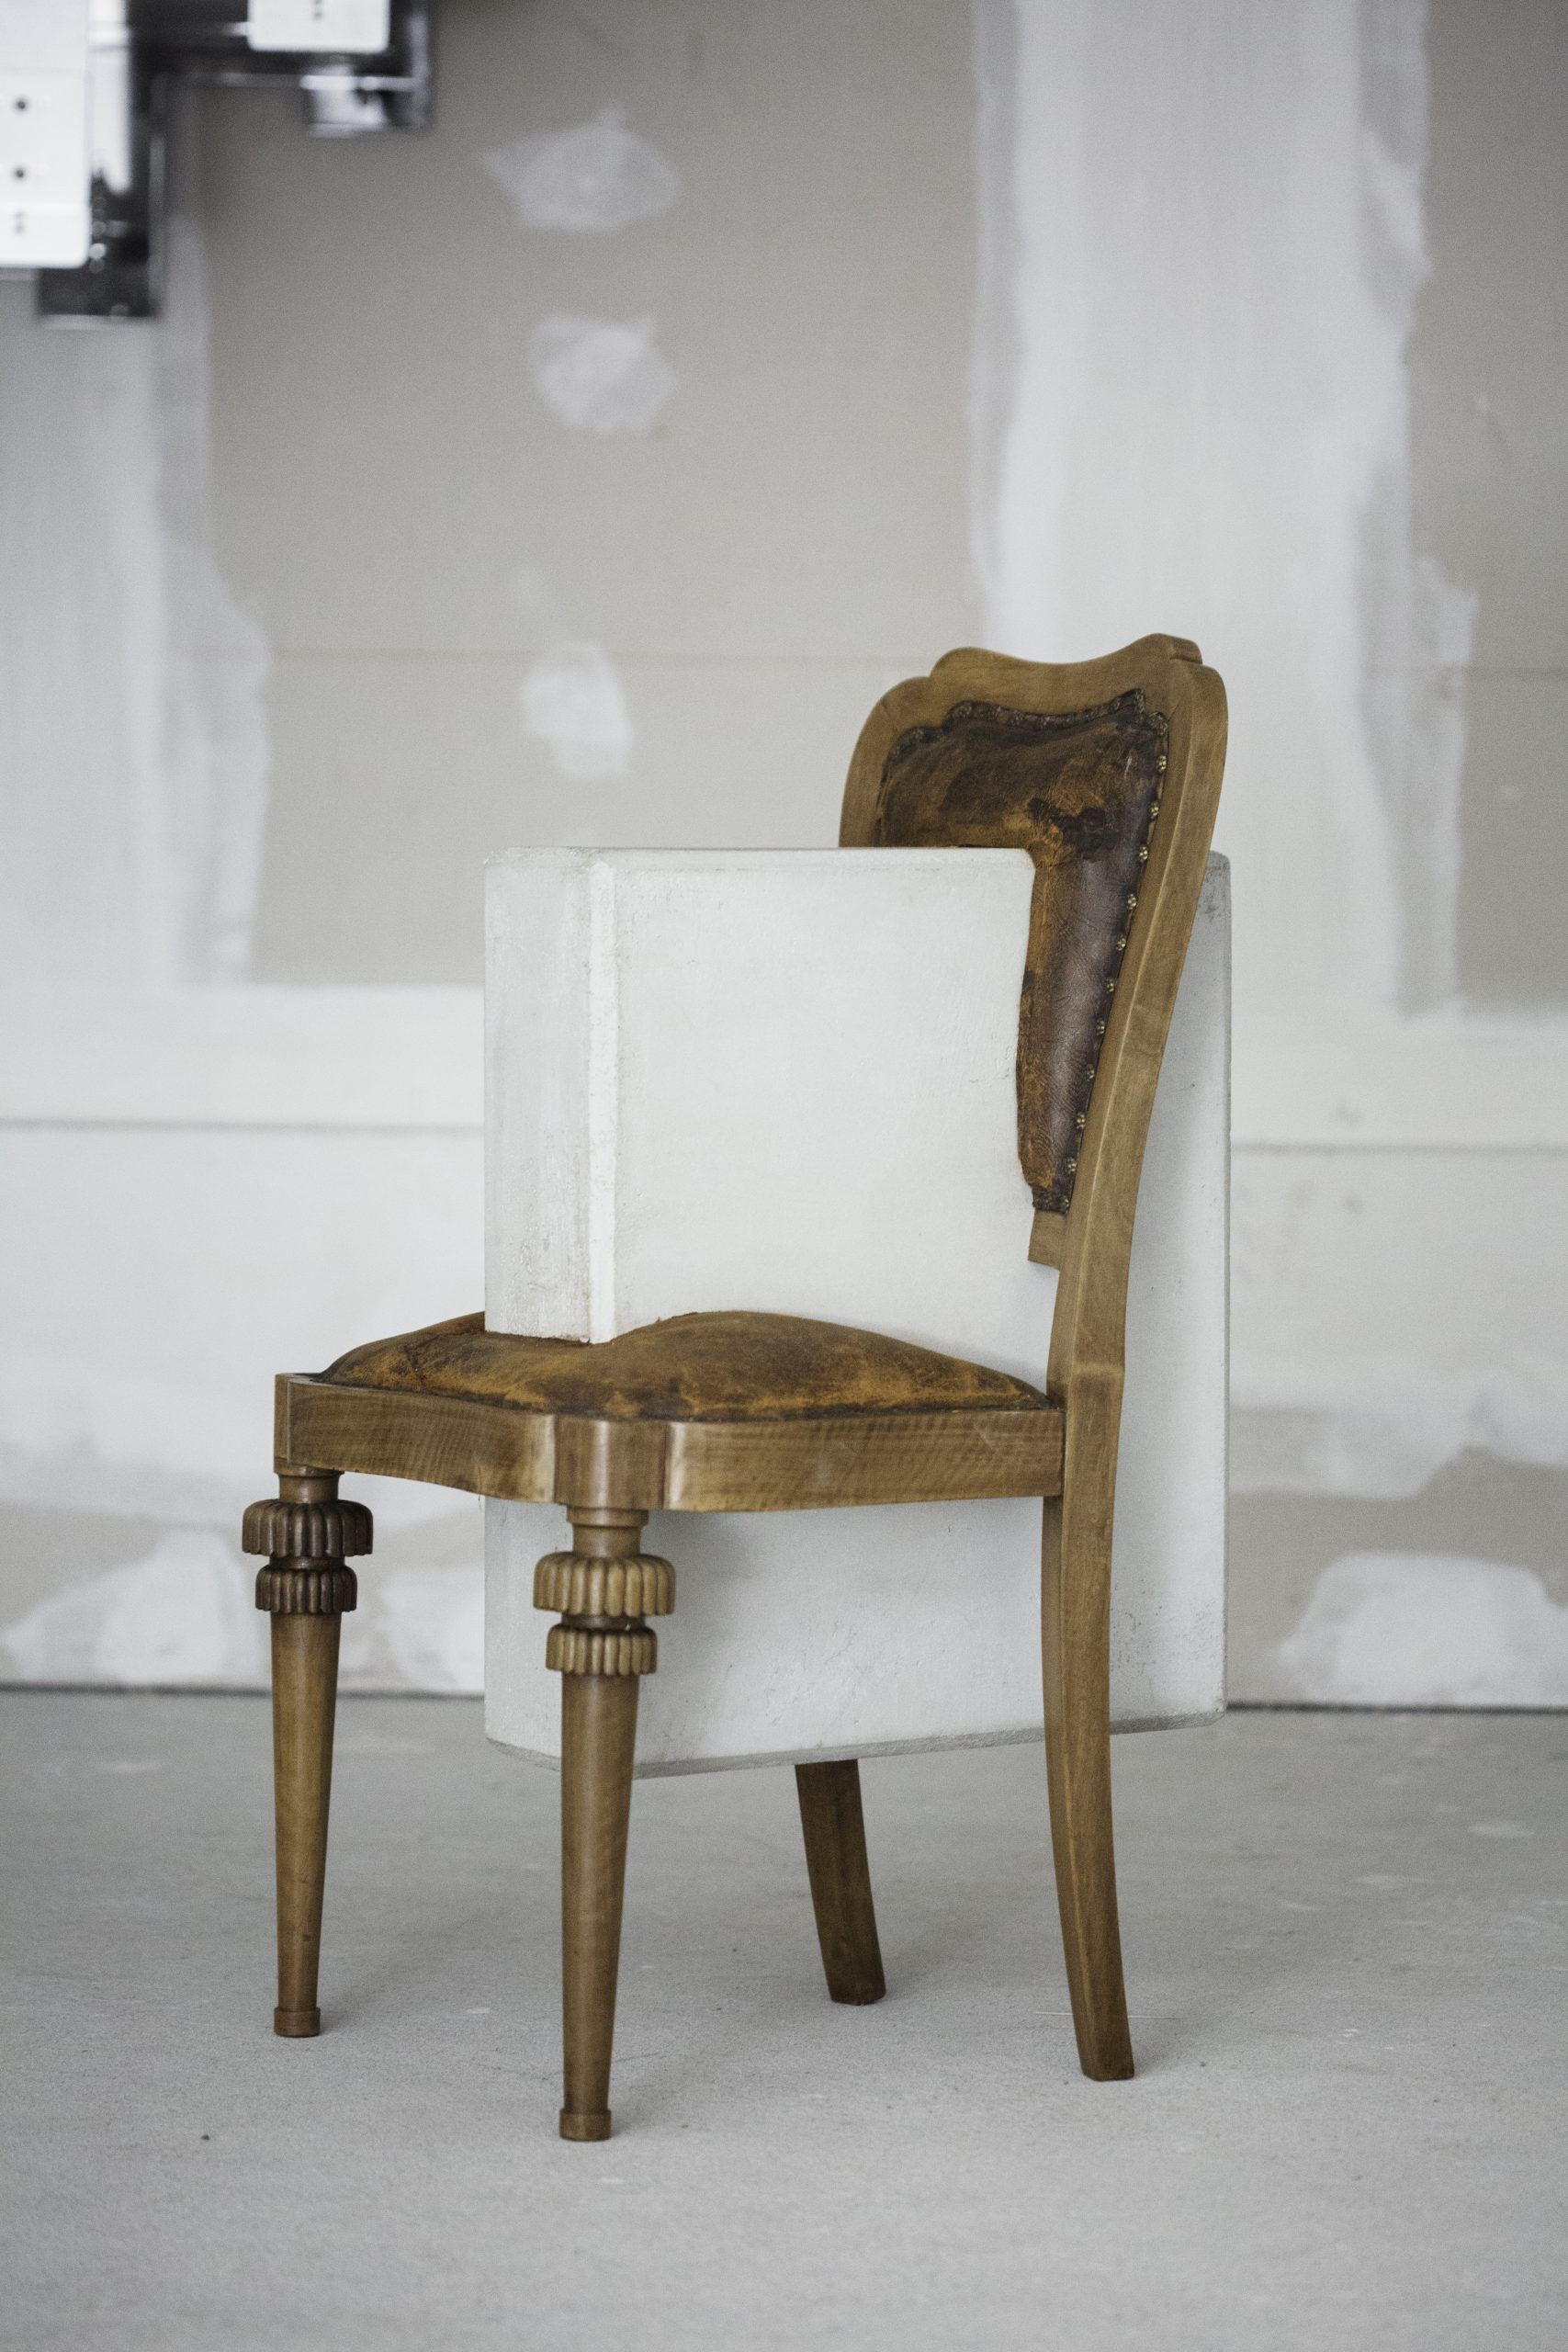 © Studio Nucelo Boolean and Chair courtesy ammann gallery